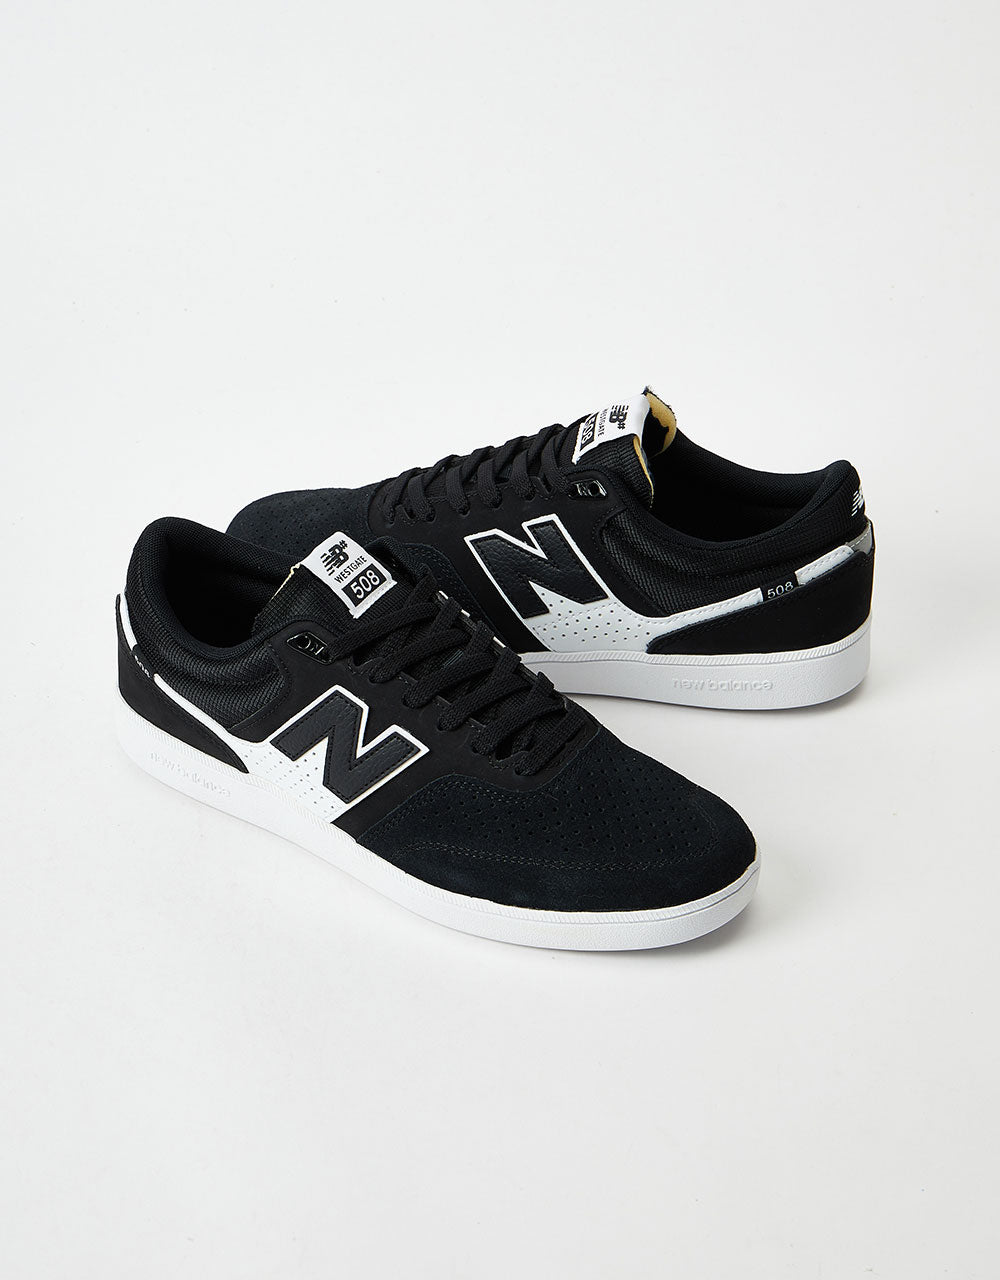 New Balance Numeric 508 Skate Shoes - Black/White